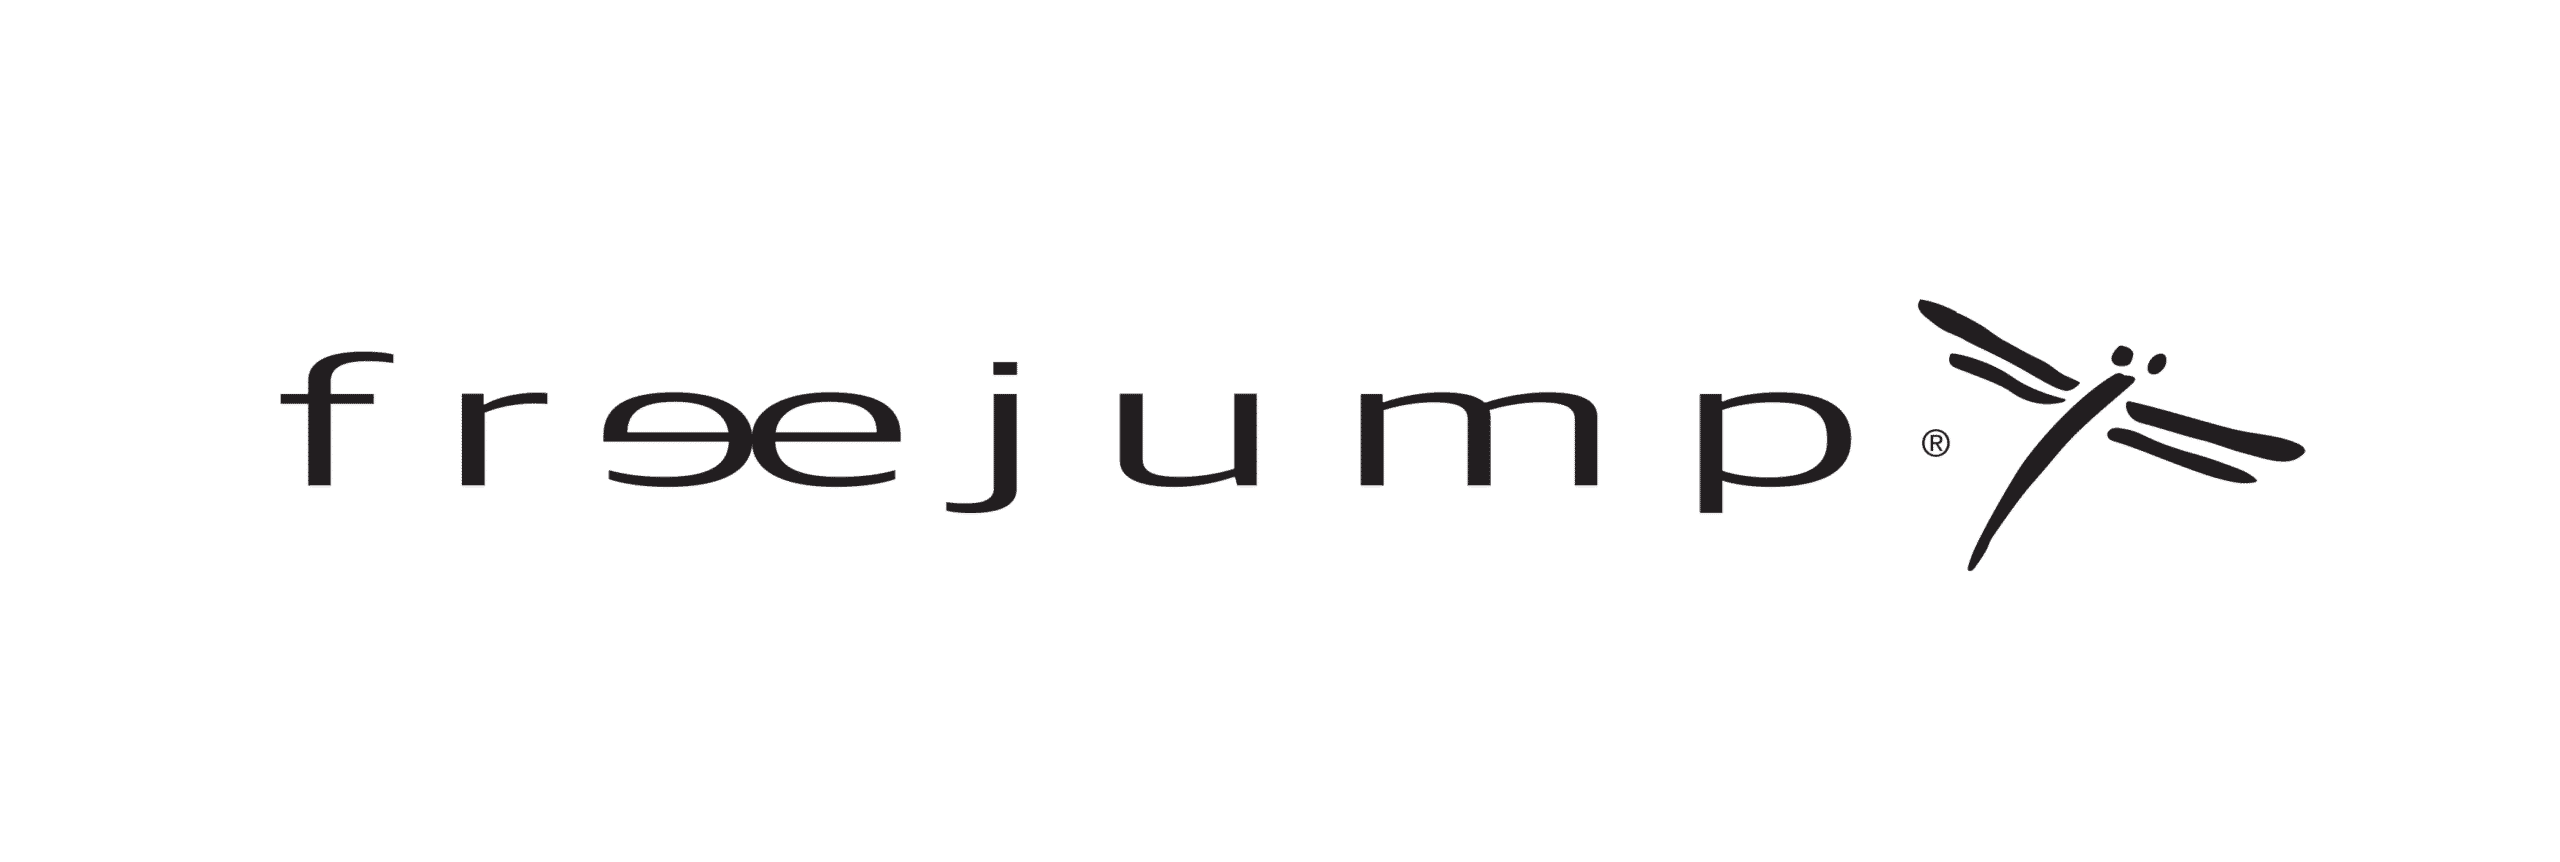 freejump logo